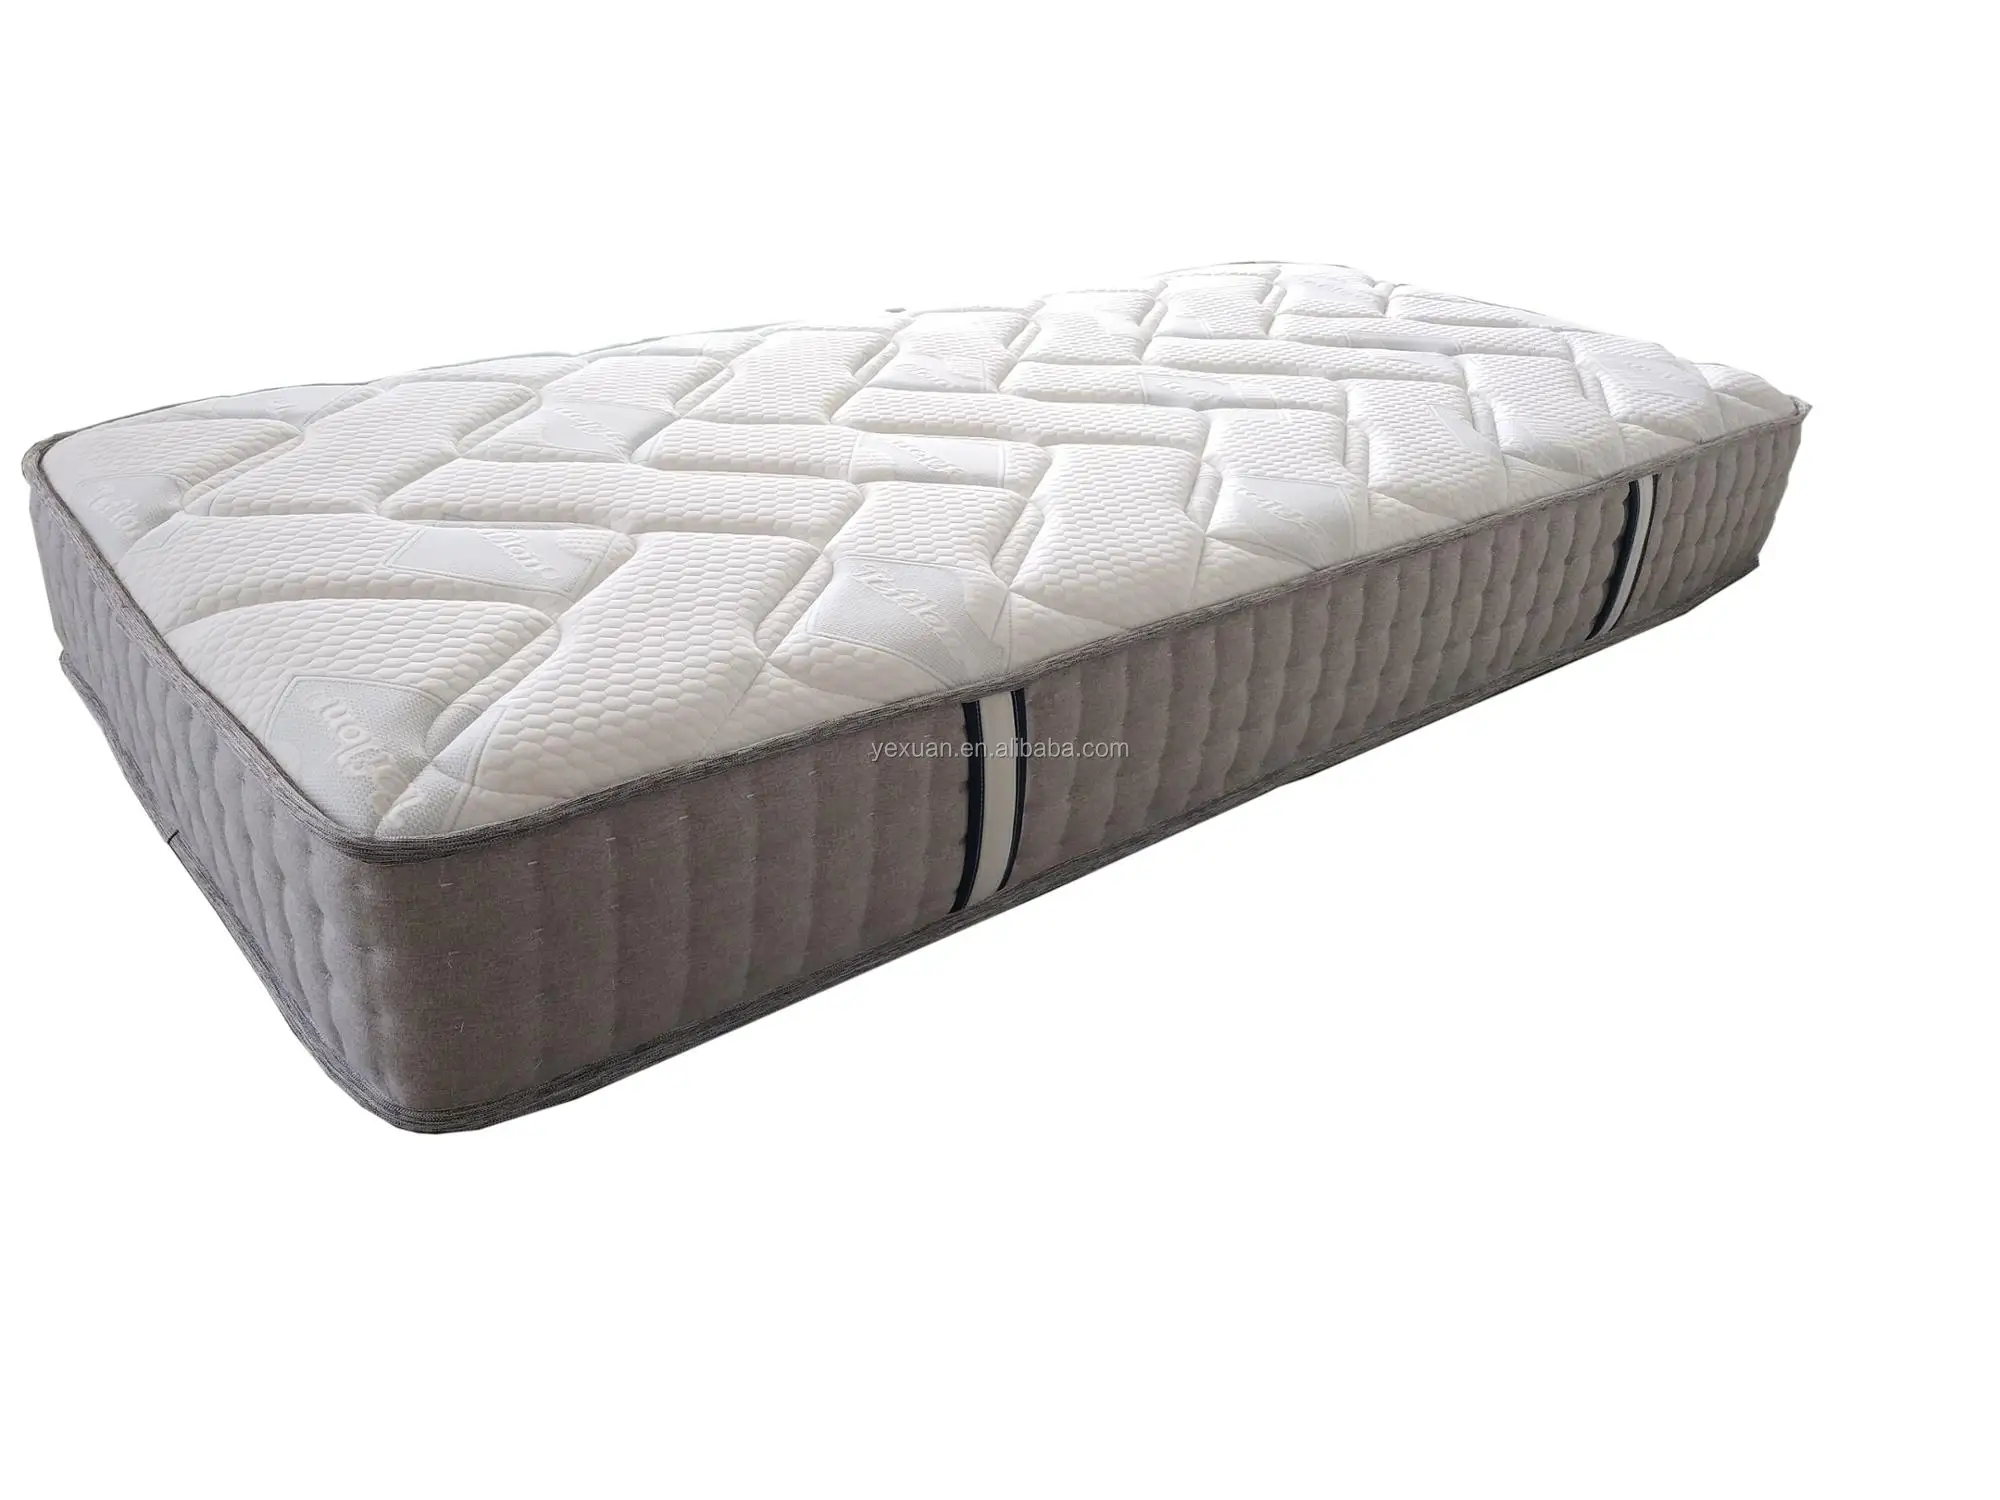 sponge bed mattress price